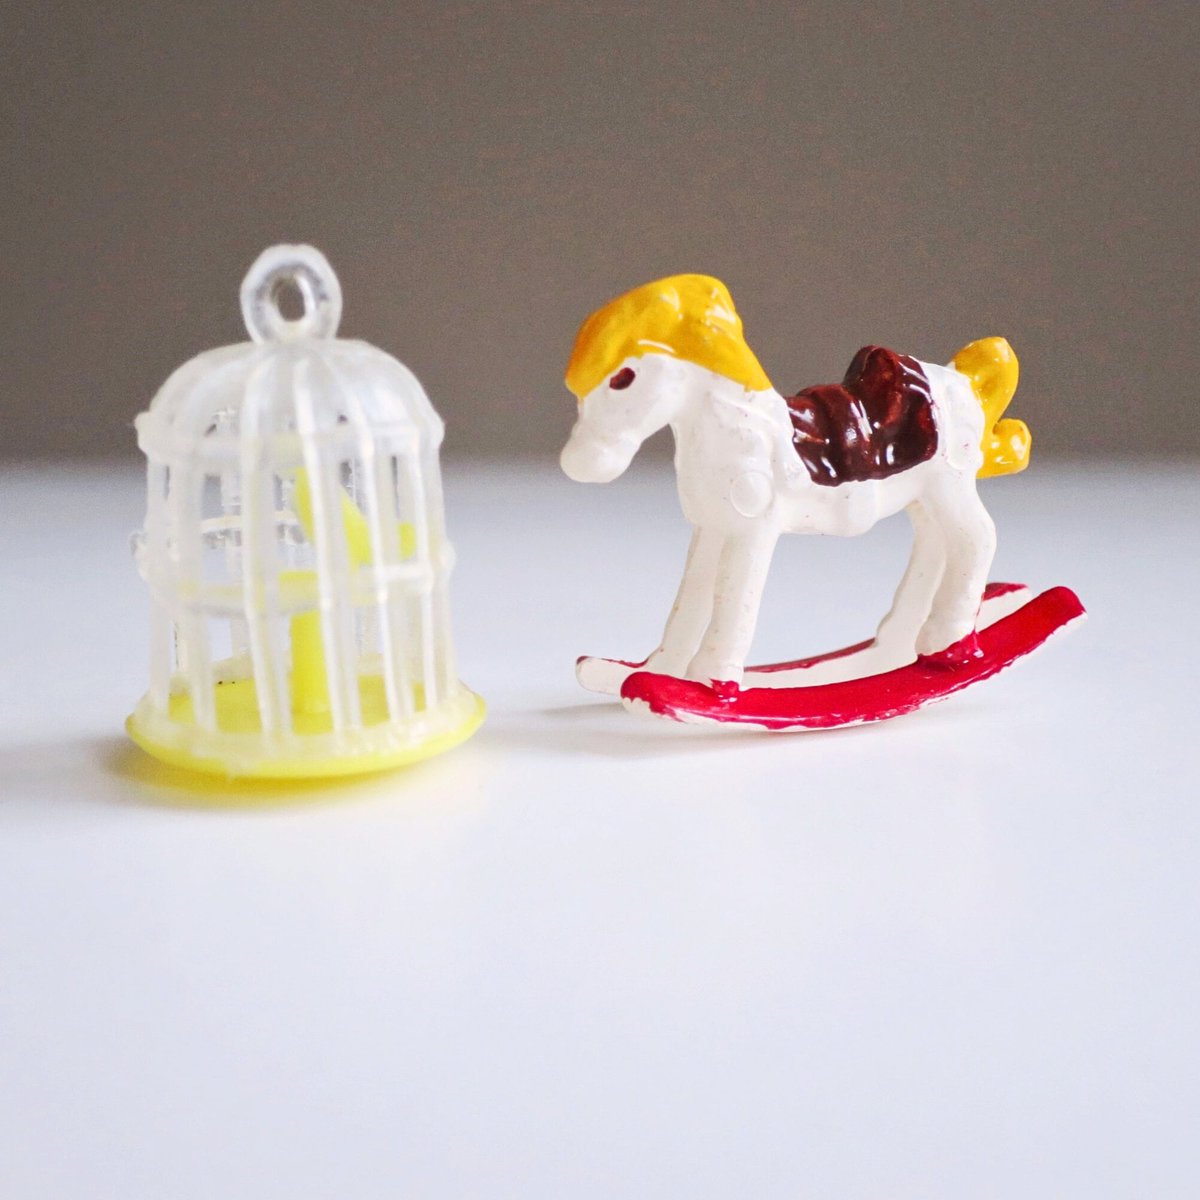 Dollhouse Birdcage with Bird, 1:12, Vintage Rocking Horse, 3/4' Gumball Charm tuppu.net/5b369df9 #Etsyteamunity #SMILEtt23 #SwirlingOrange11 #VintageFun